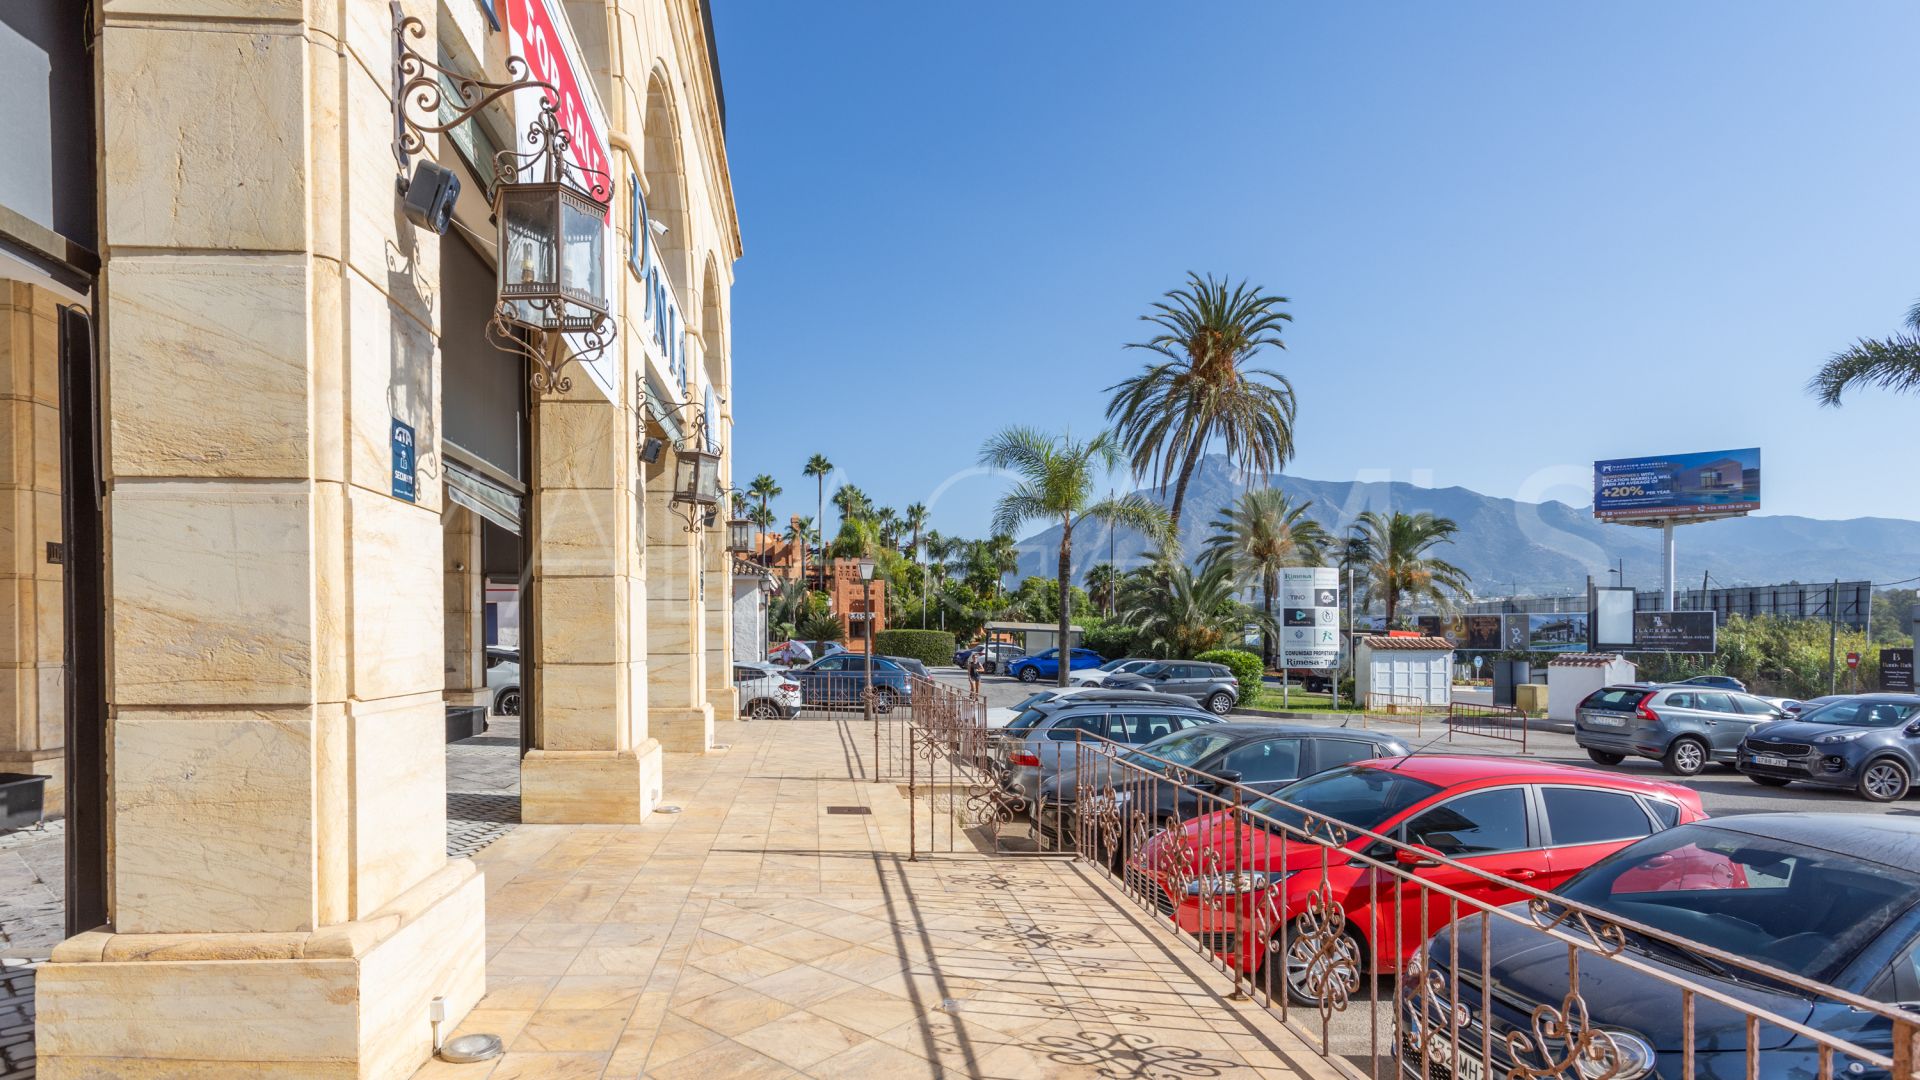 Marbella - Puerto Banus commercial premises for sale